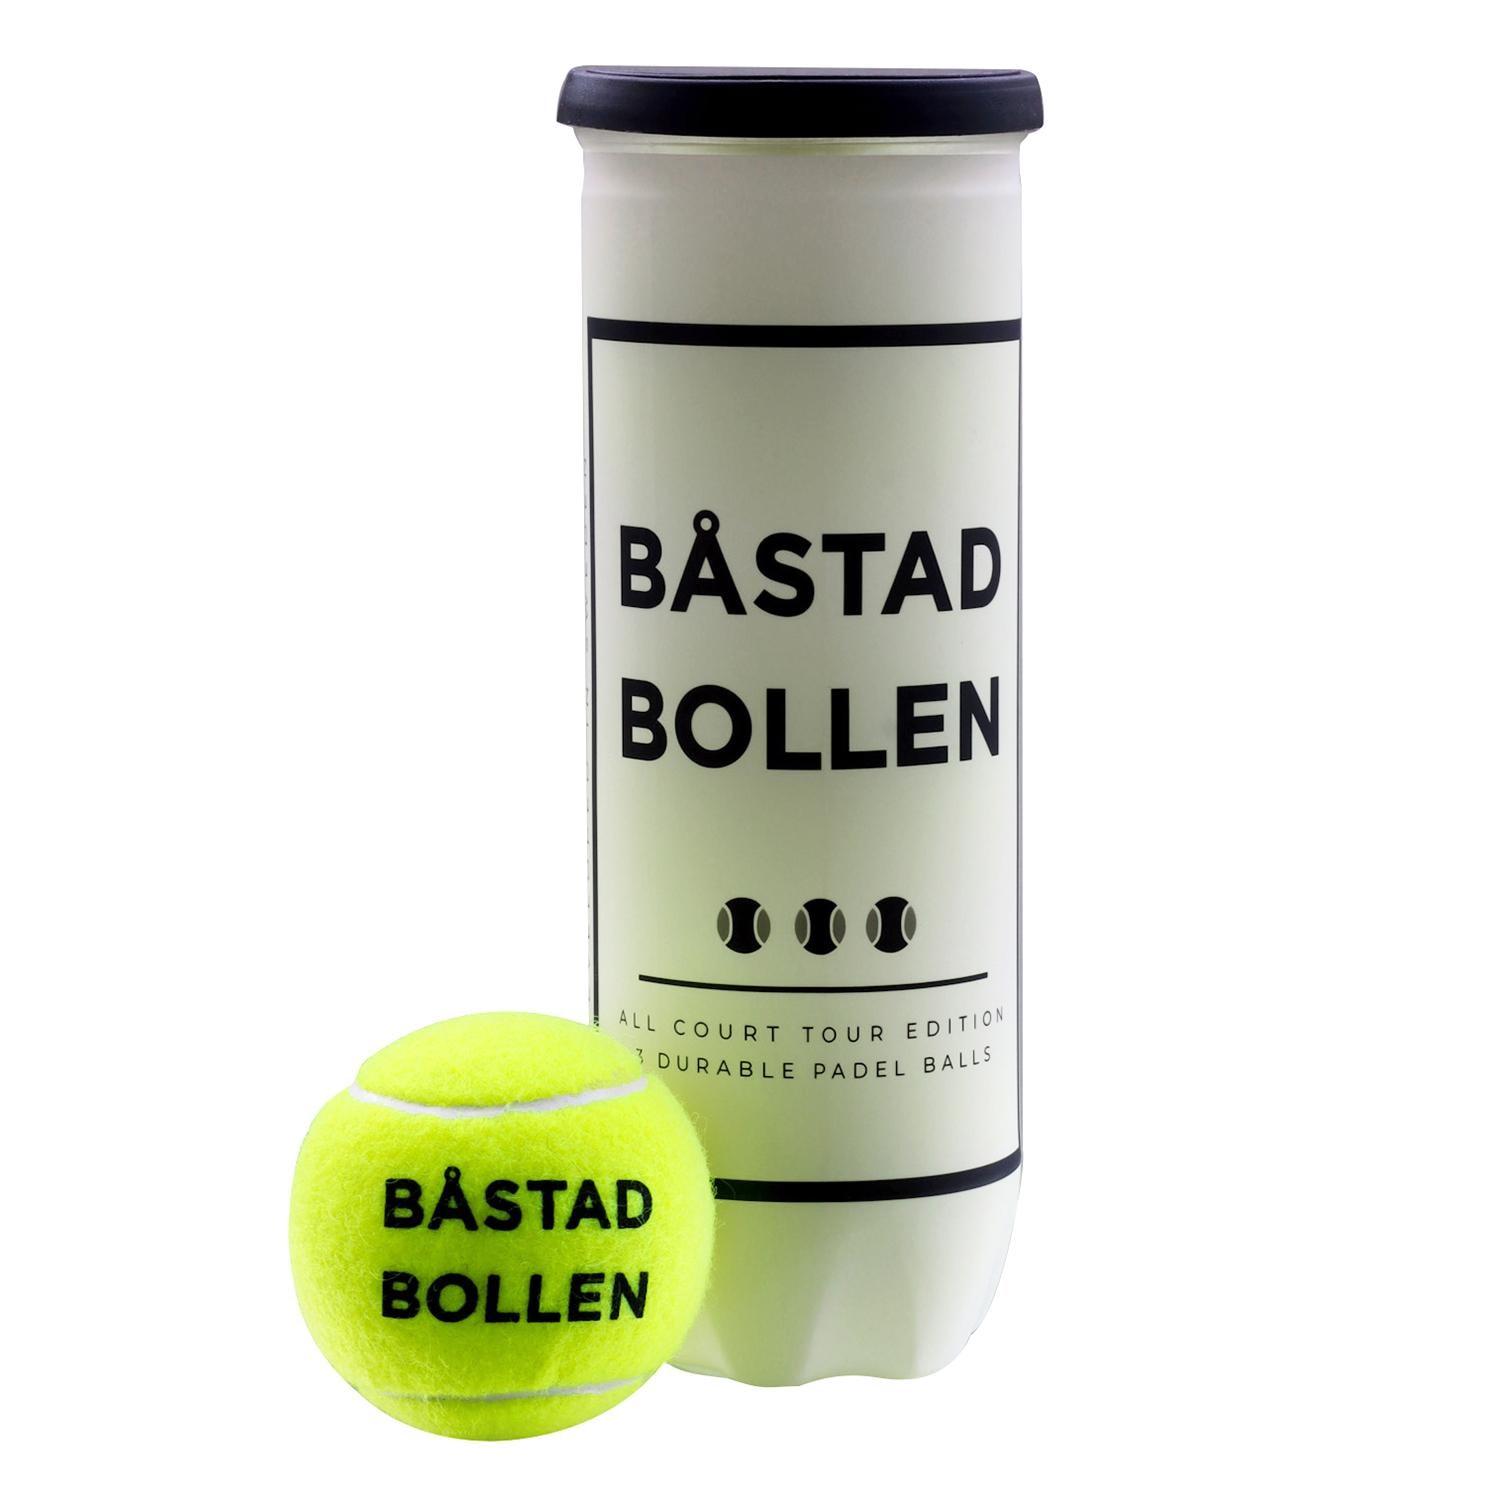 Båstad Bollen, 3x Padelbollar - All Court Tour Edt (1 av 9)